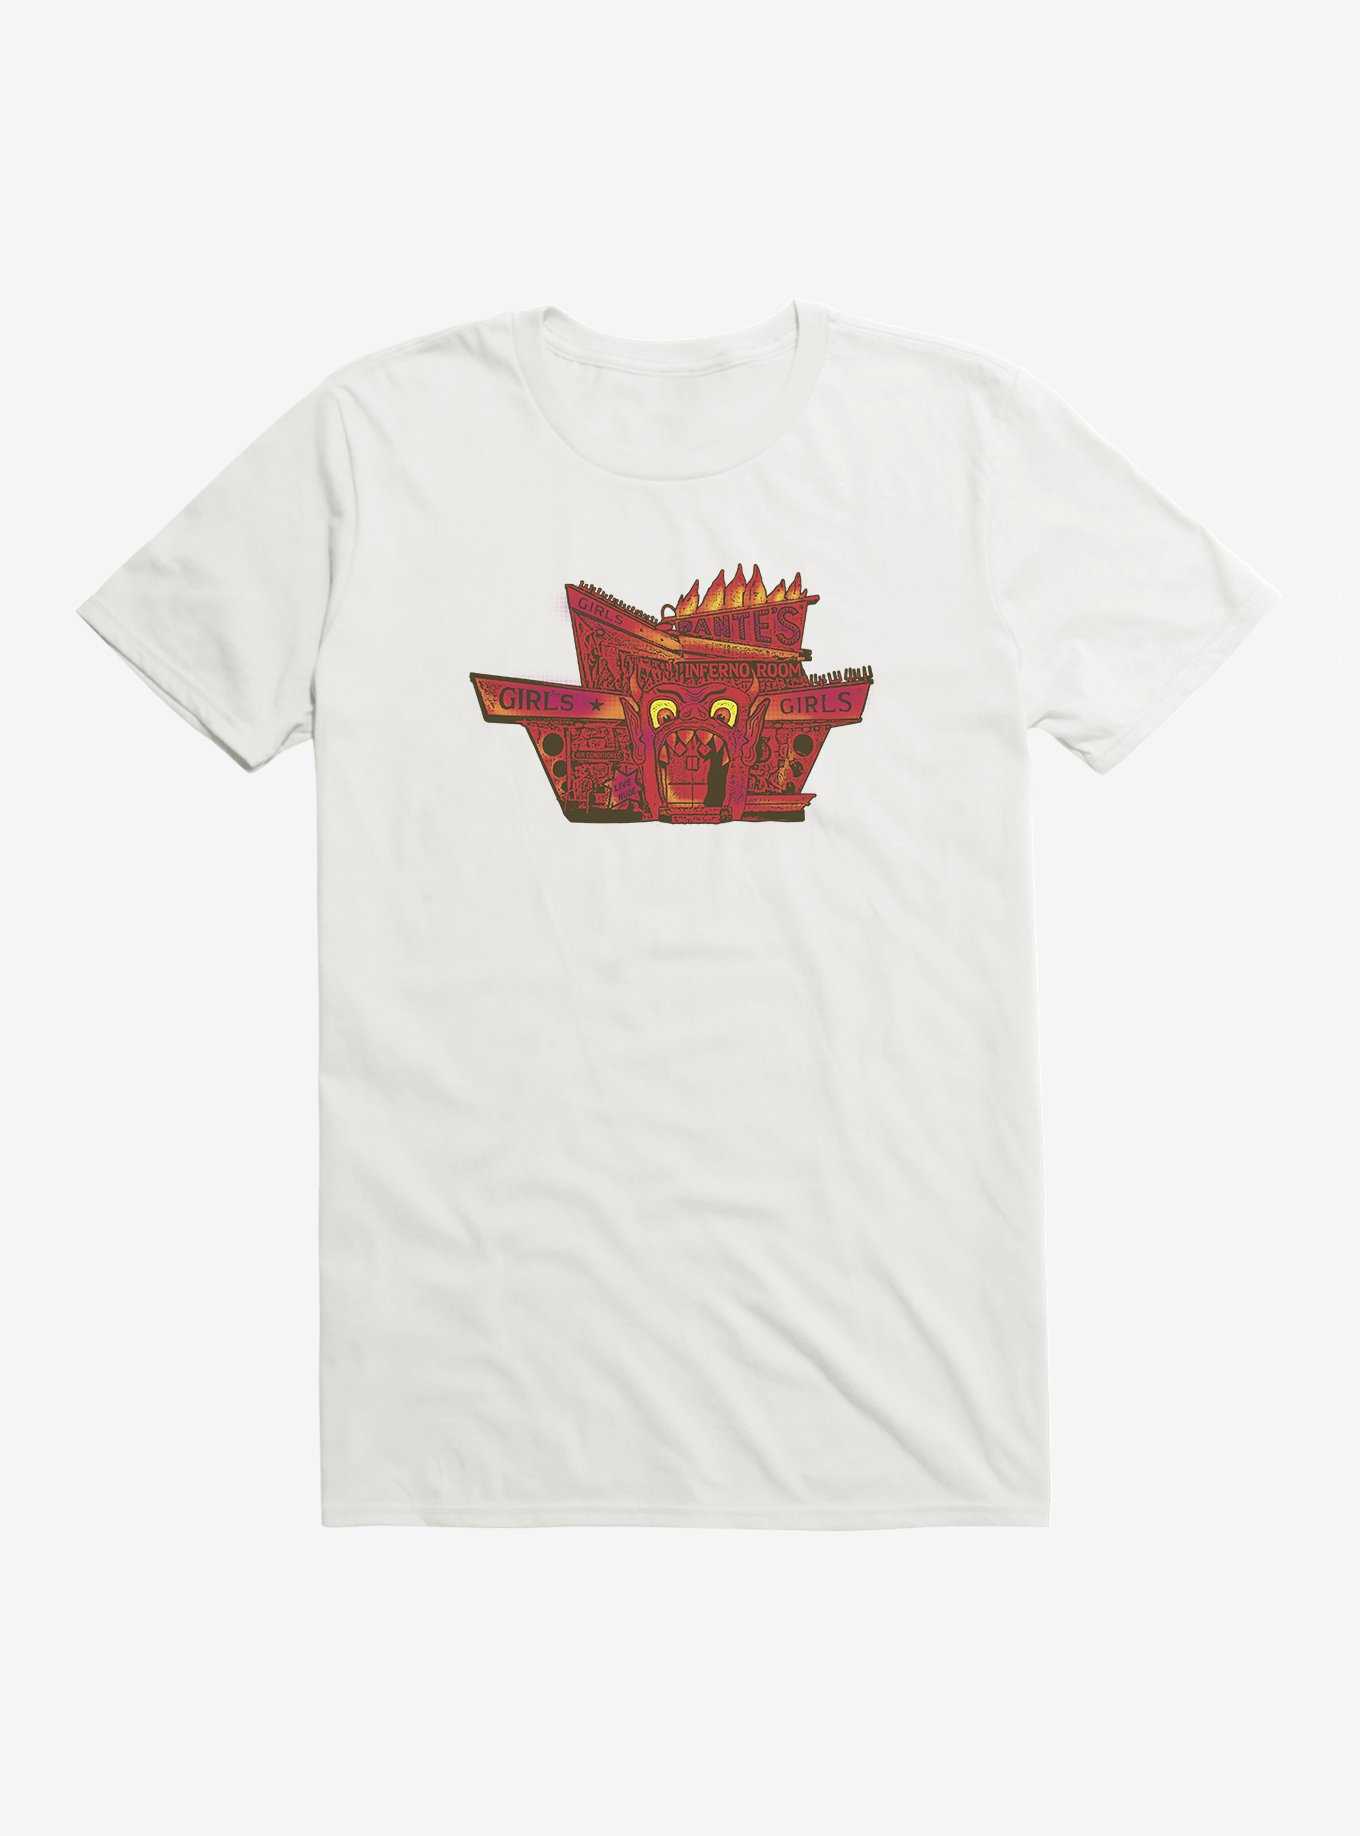 Beetlejuice Inferno Room T-Shirt, , hi-res